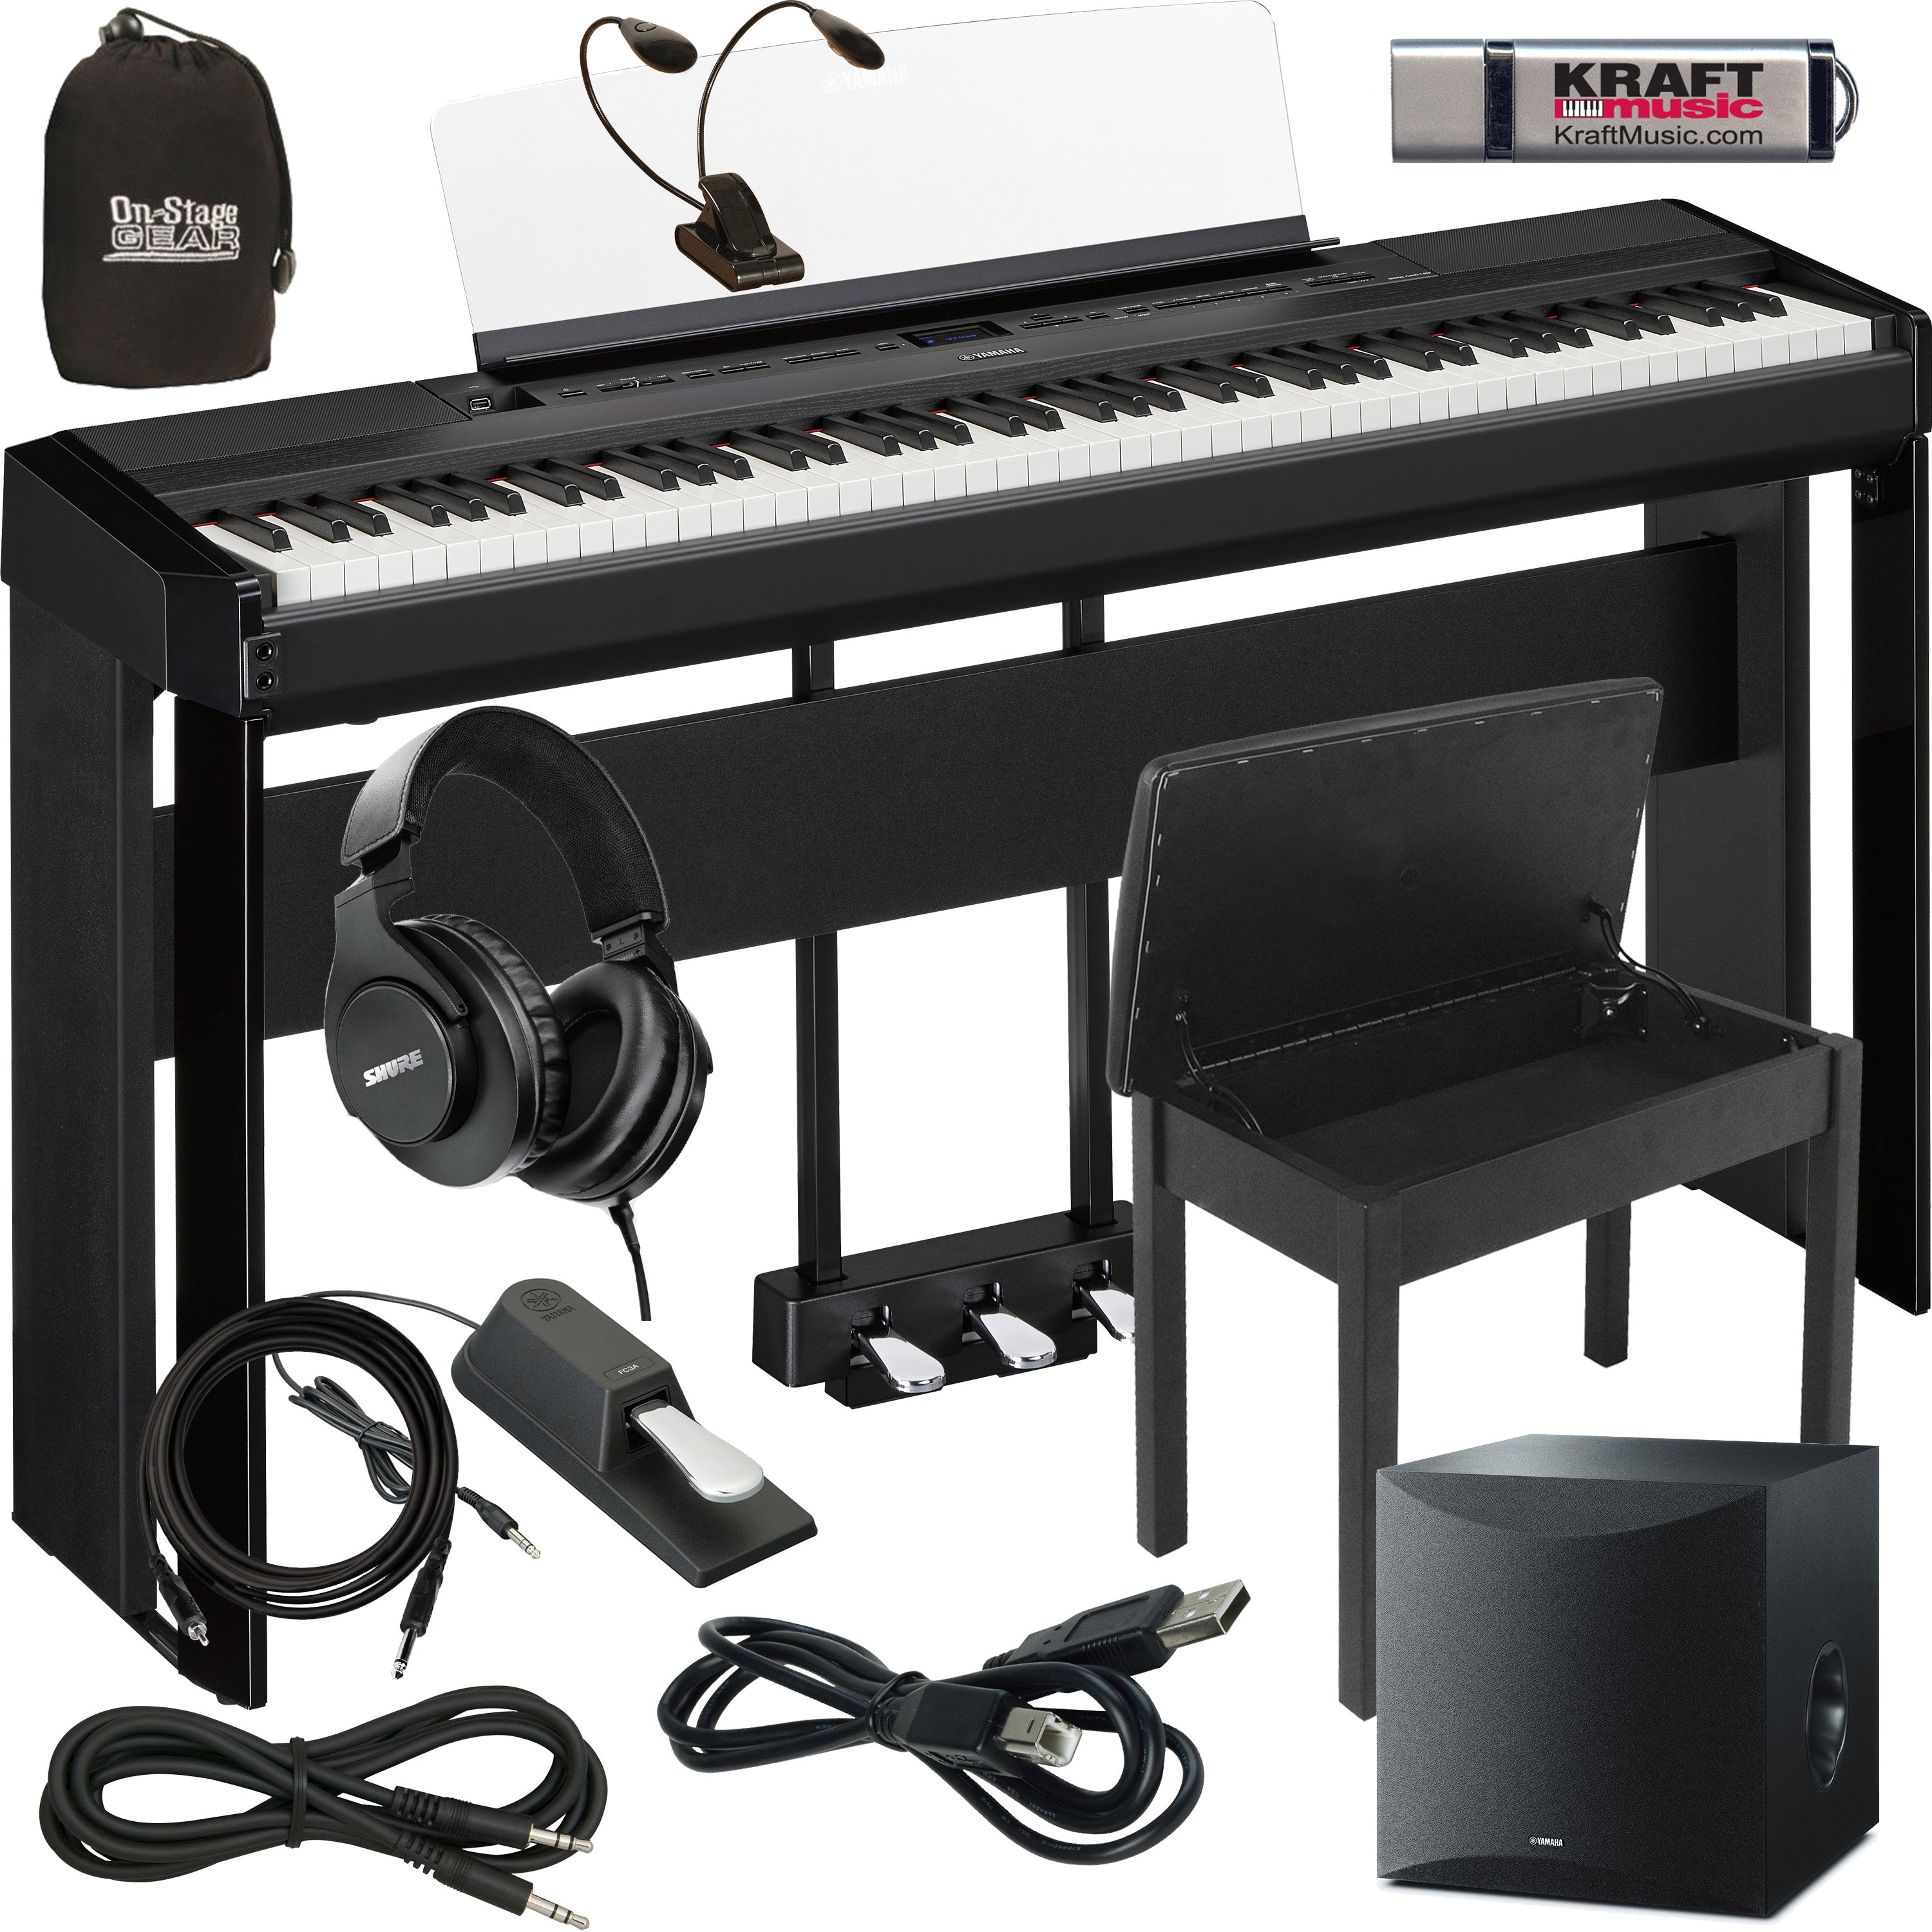 Yamaha P-525 88-key Digital Piano with Speakers - Black